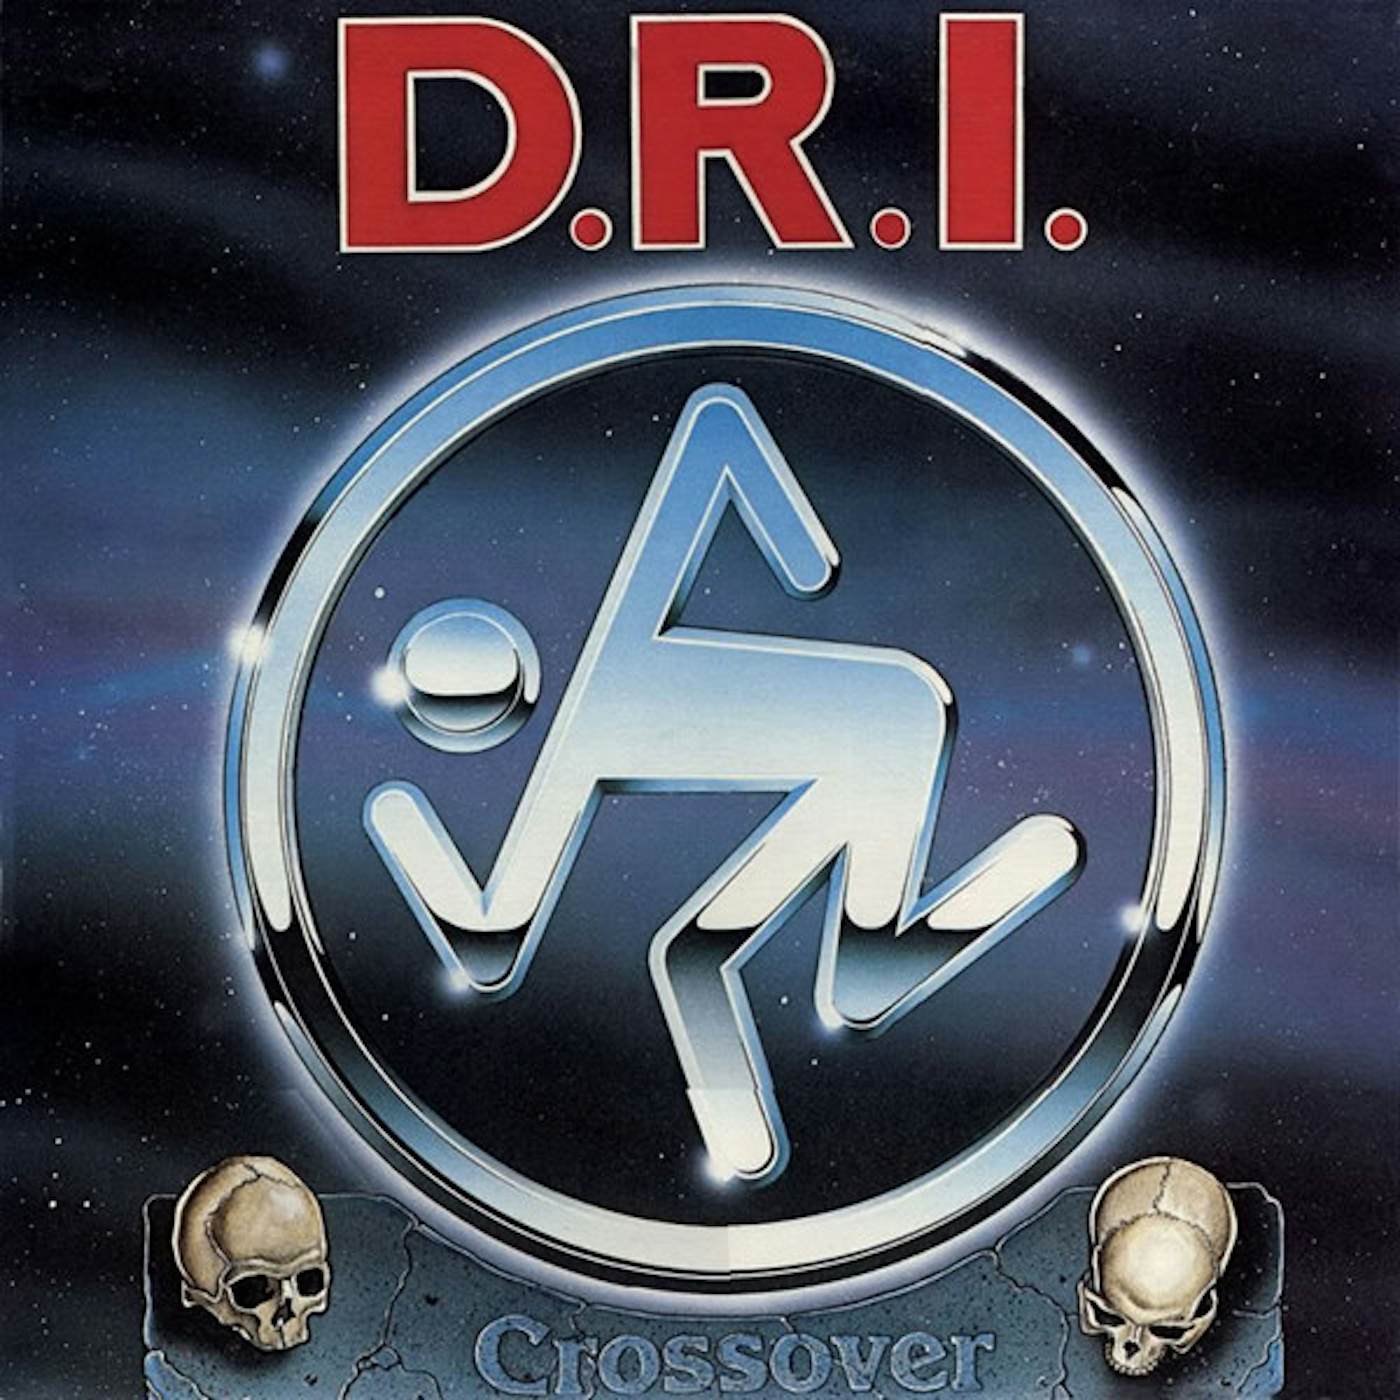 D.R.I. CROSSOVER: MILLENIUM EDITION Vinyl Record